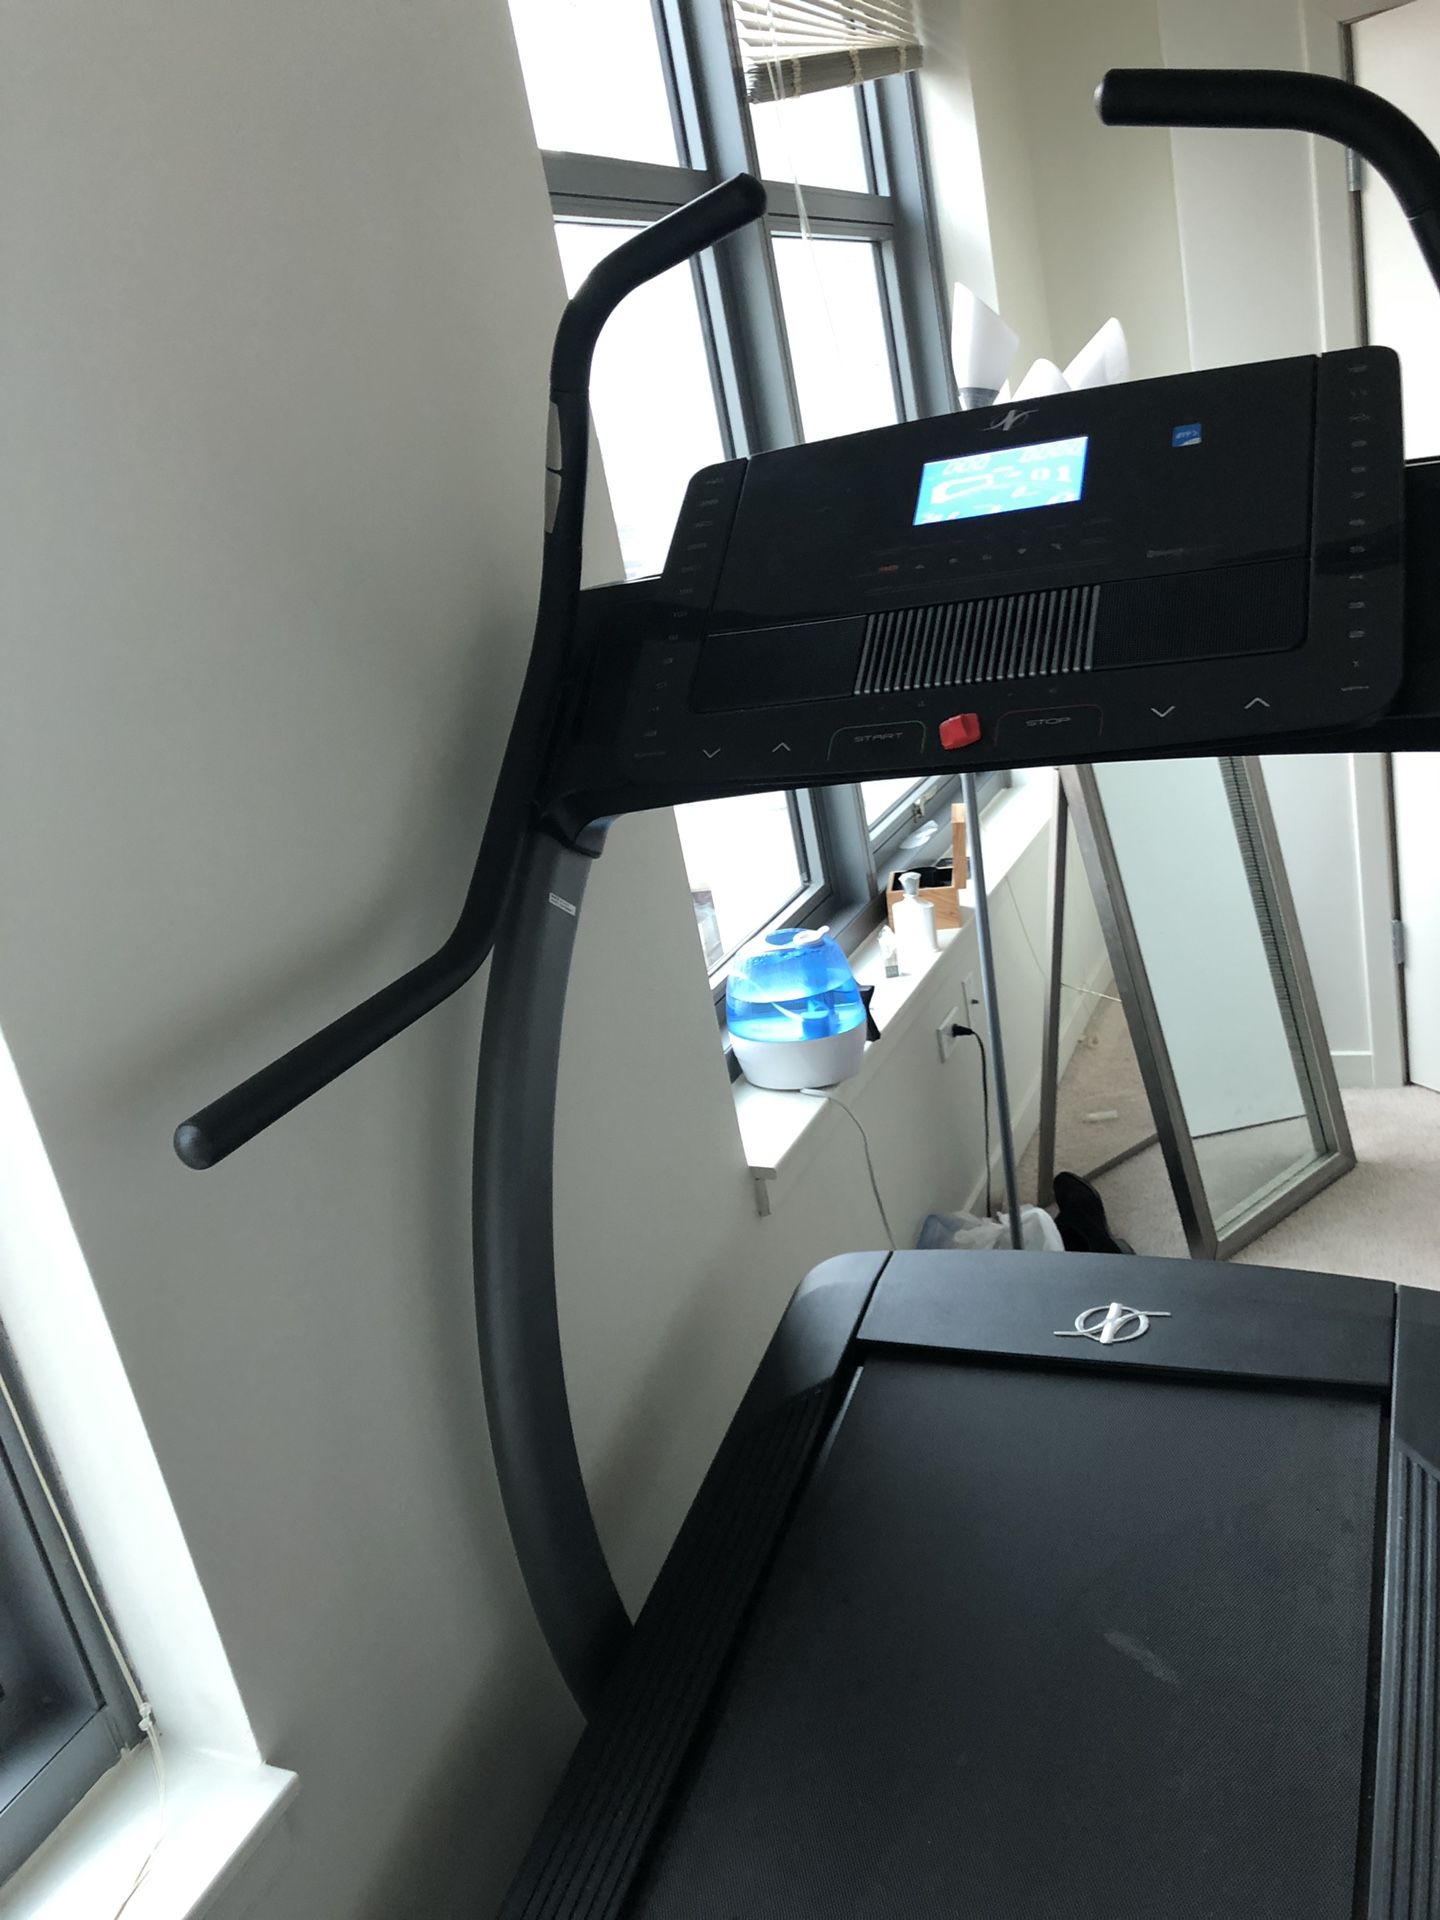 NordicTrack x7i interactive incline trainer treadmill